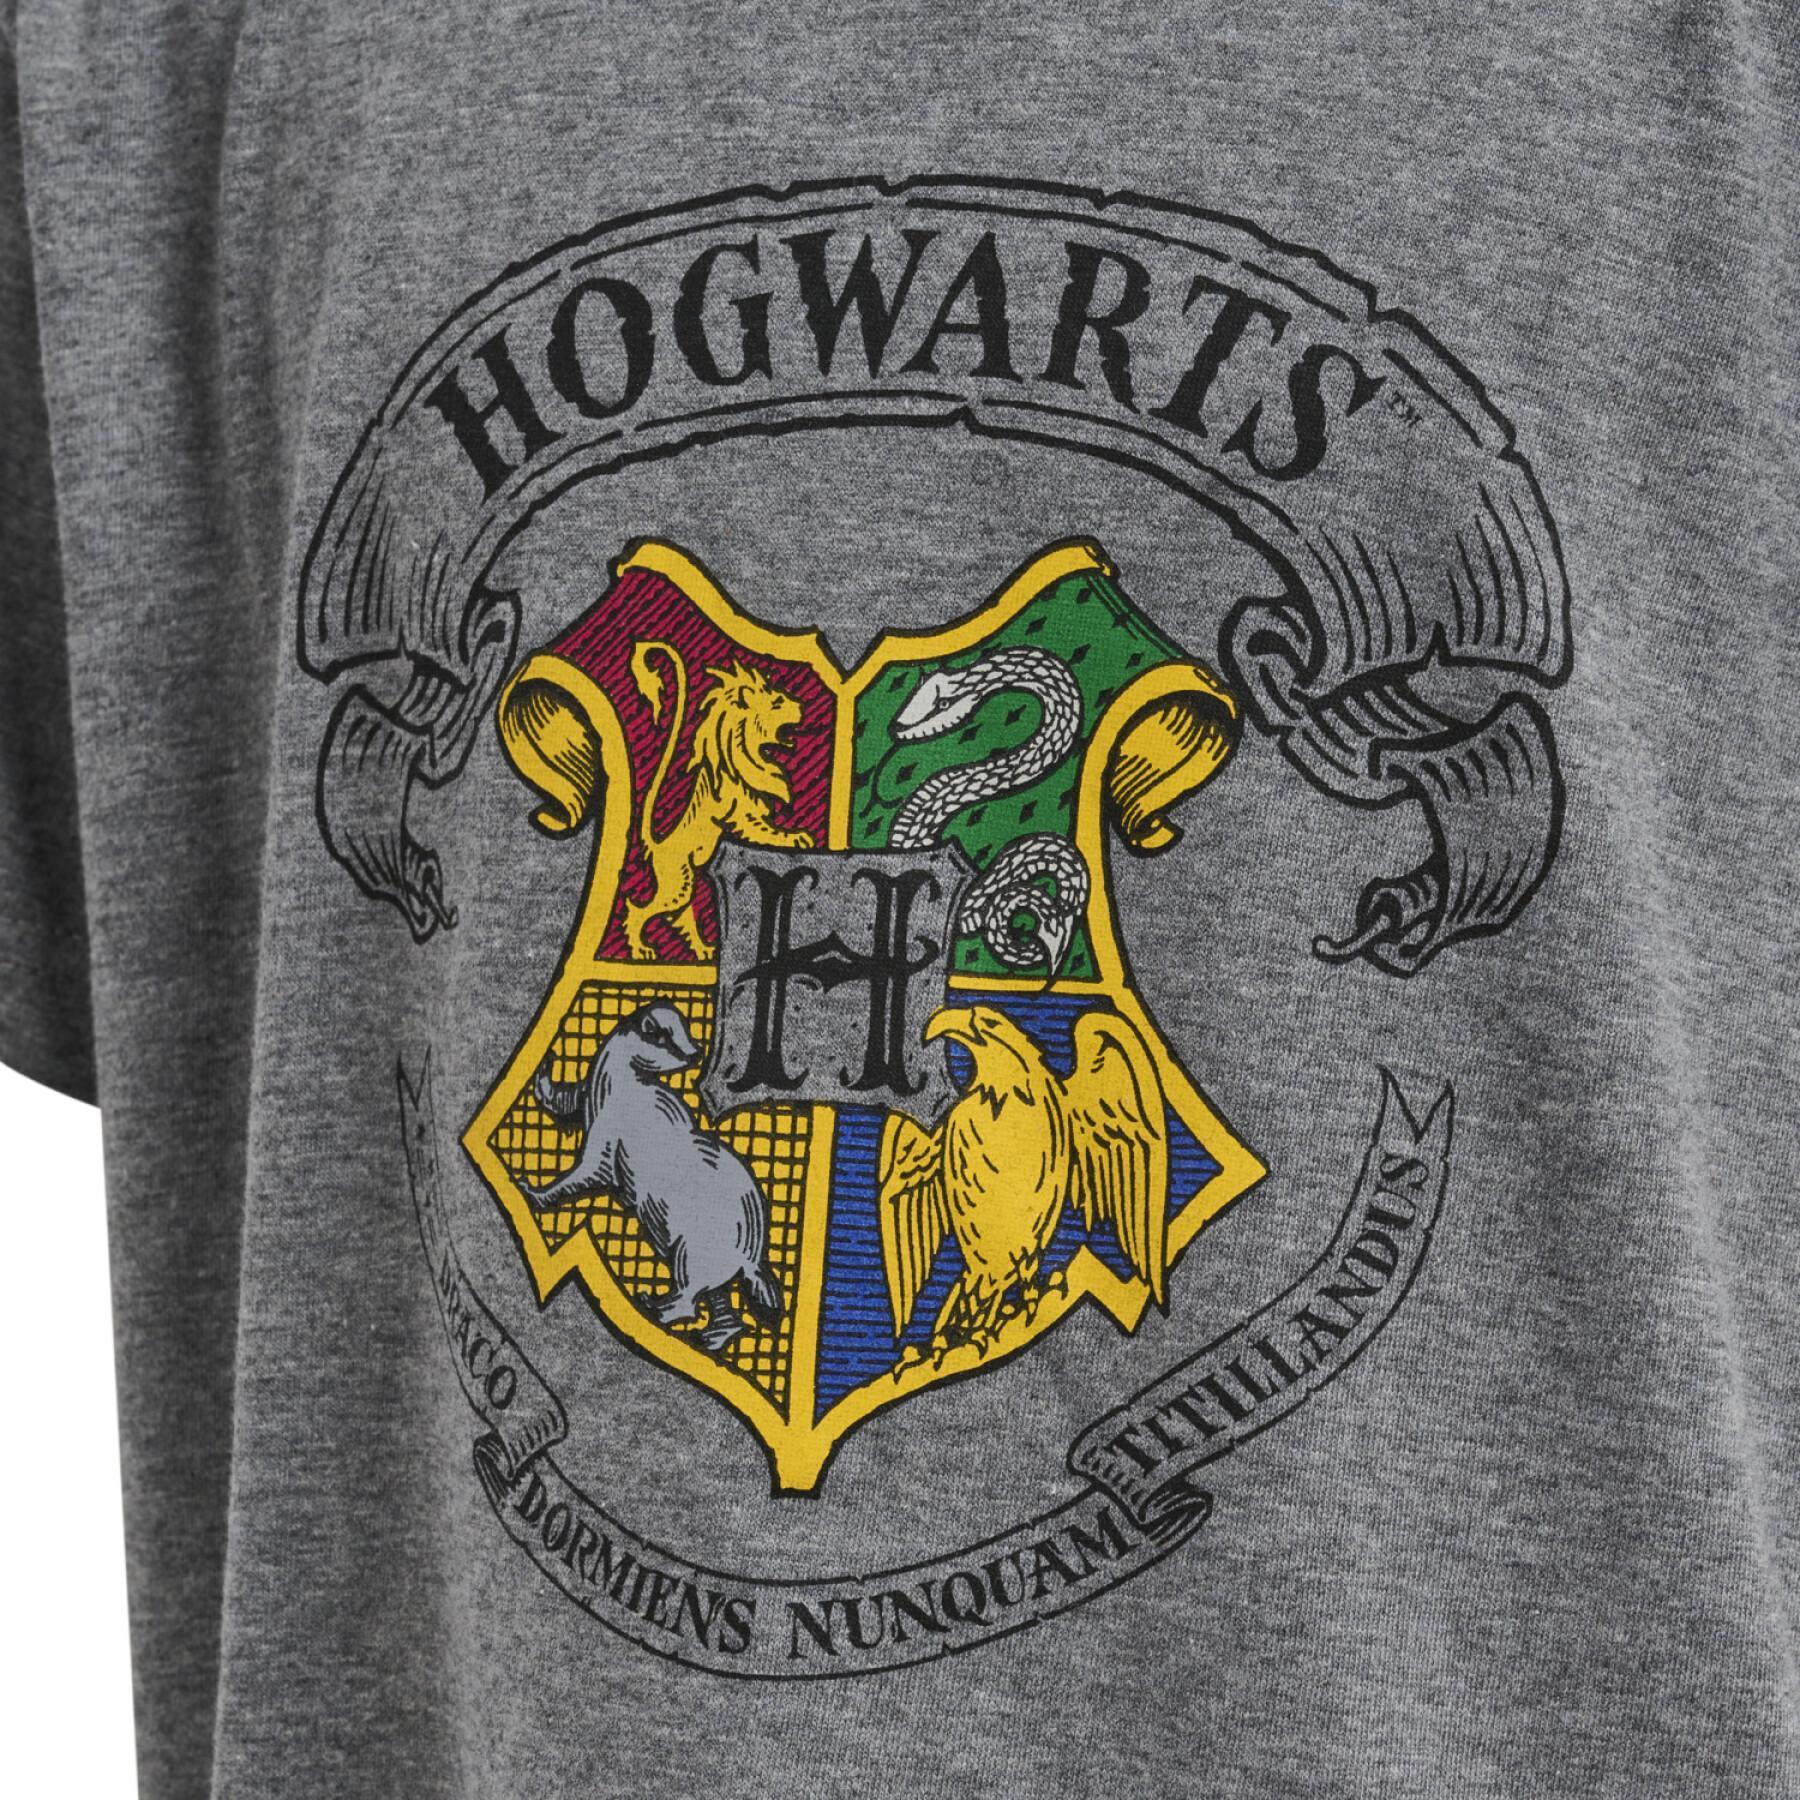 Child's T-shirt Hummel Harry Potter Tres